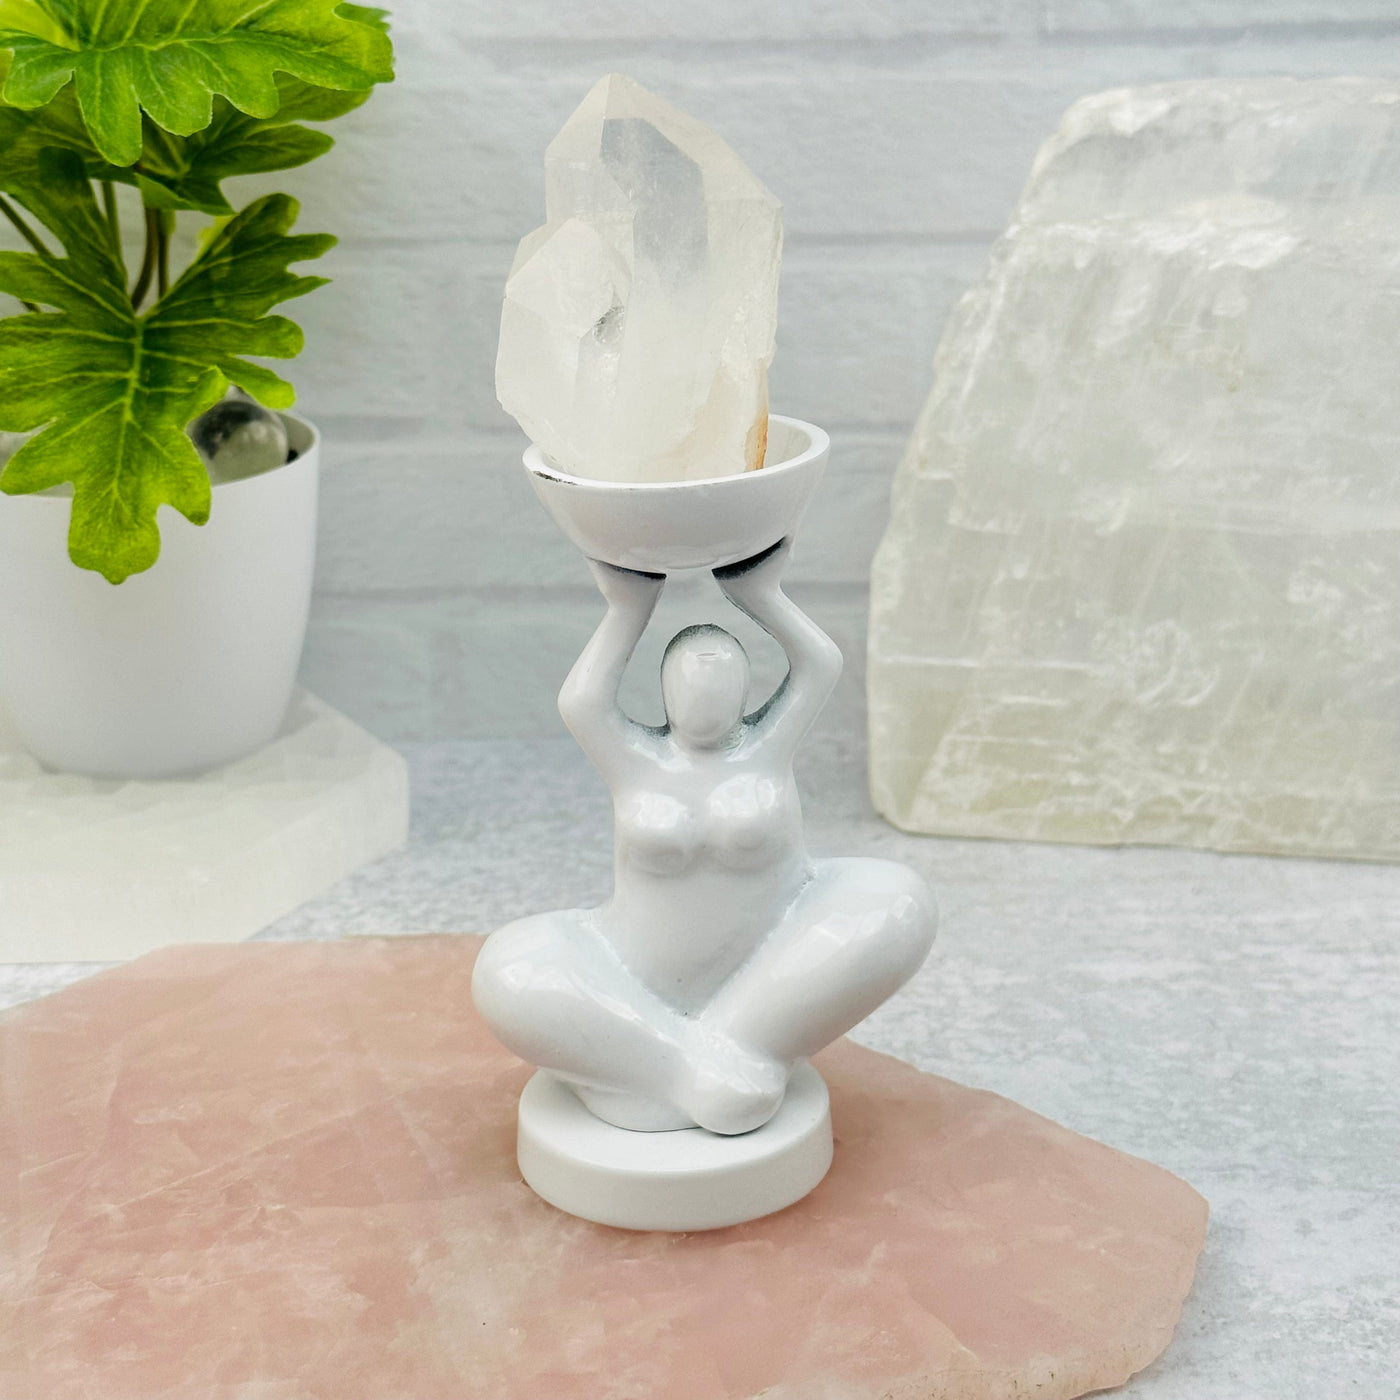 White Aluminum Yoga Goddess Figure displayed as home decor